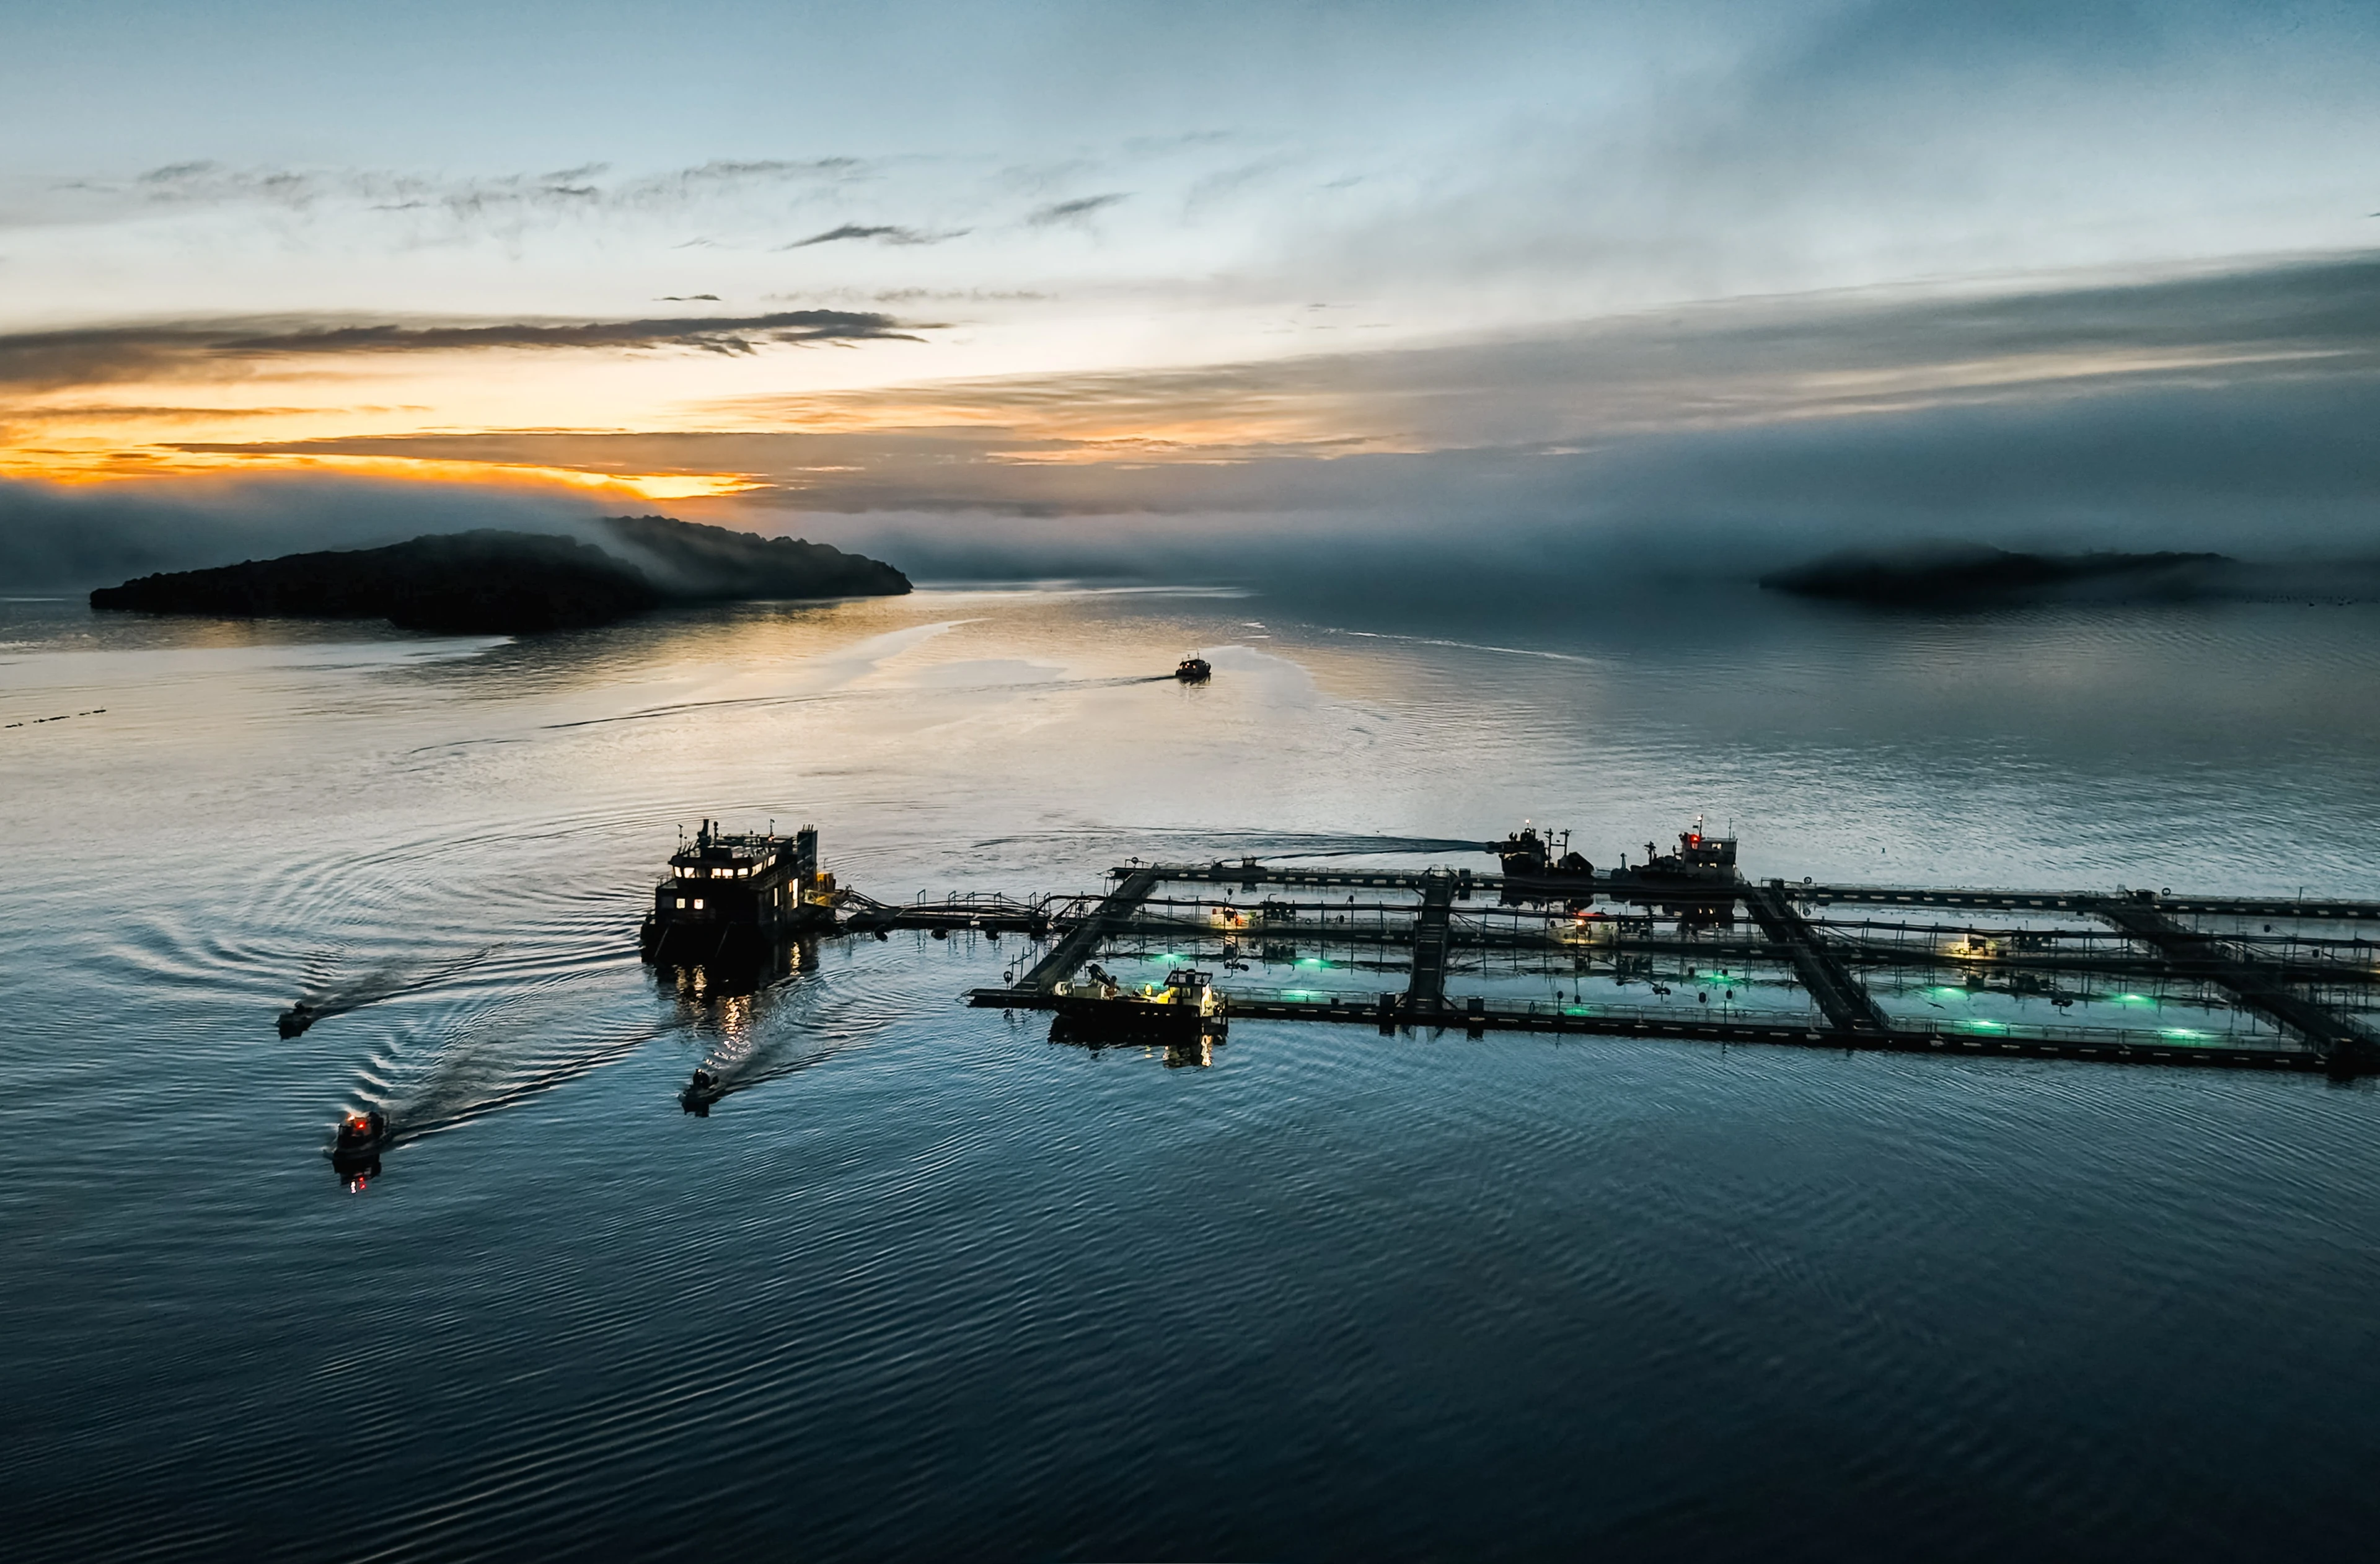 Big Glory Bay Salmon Farm at Dawn